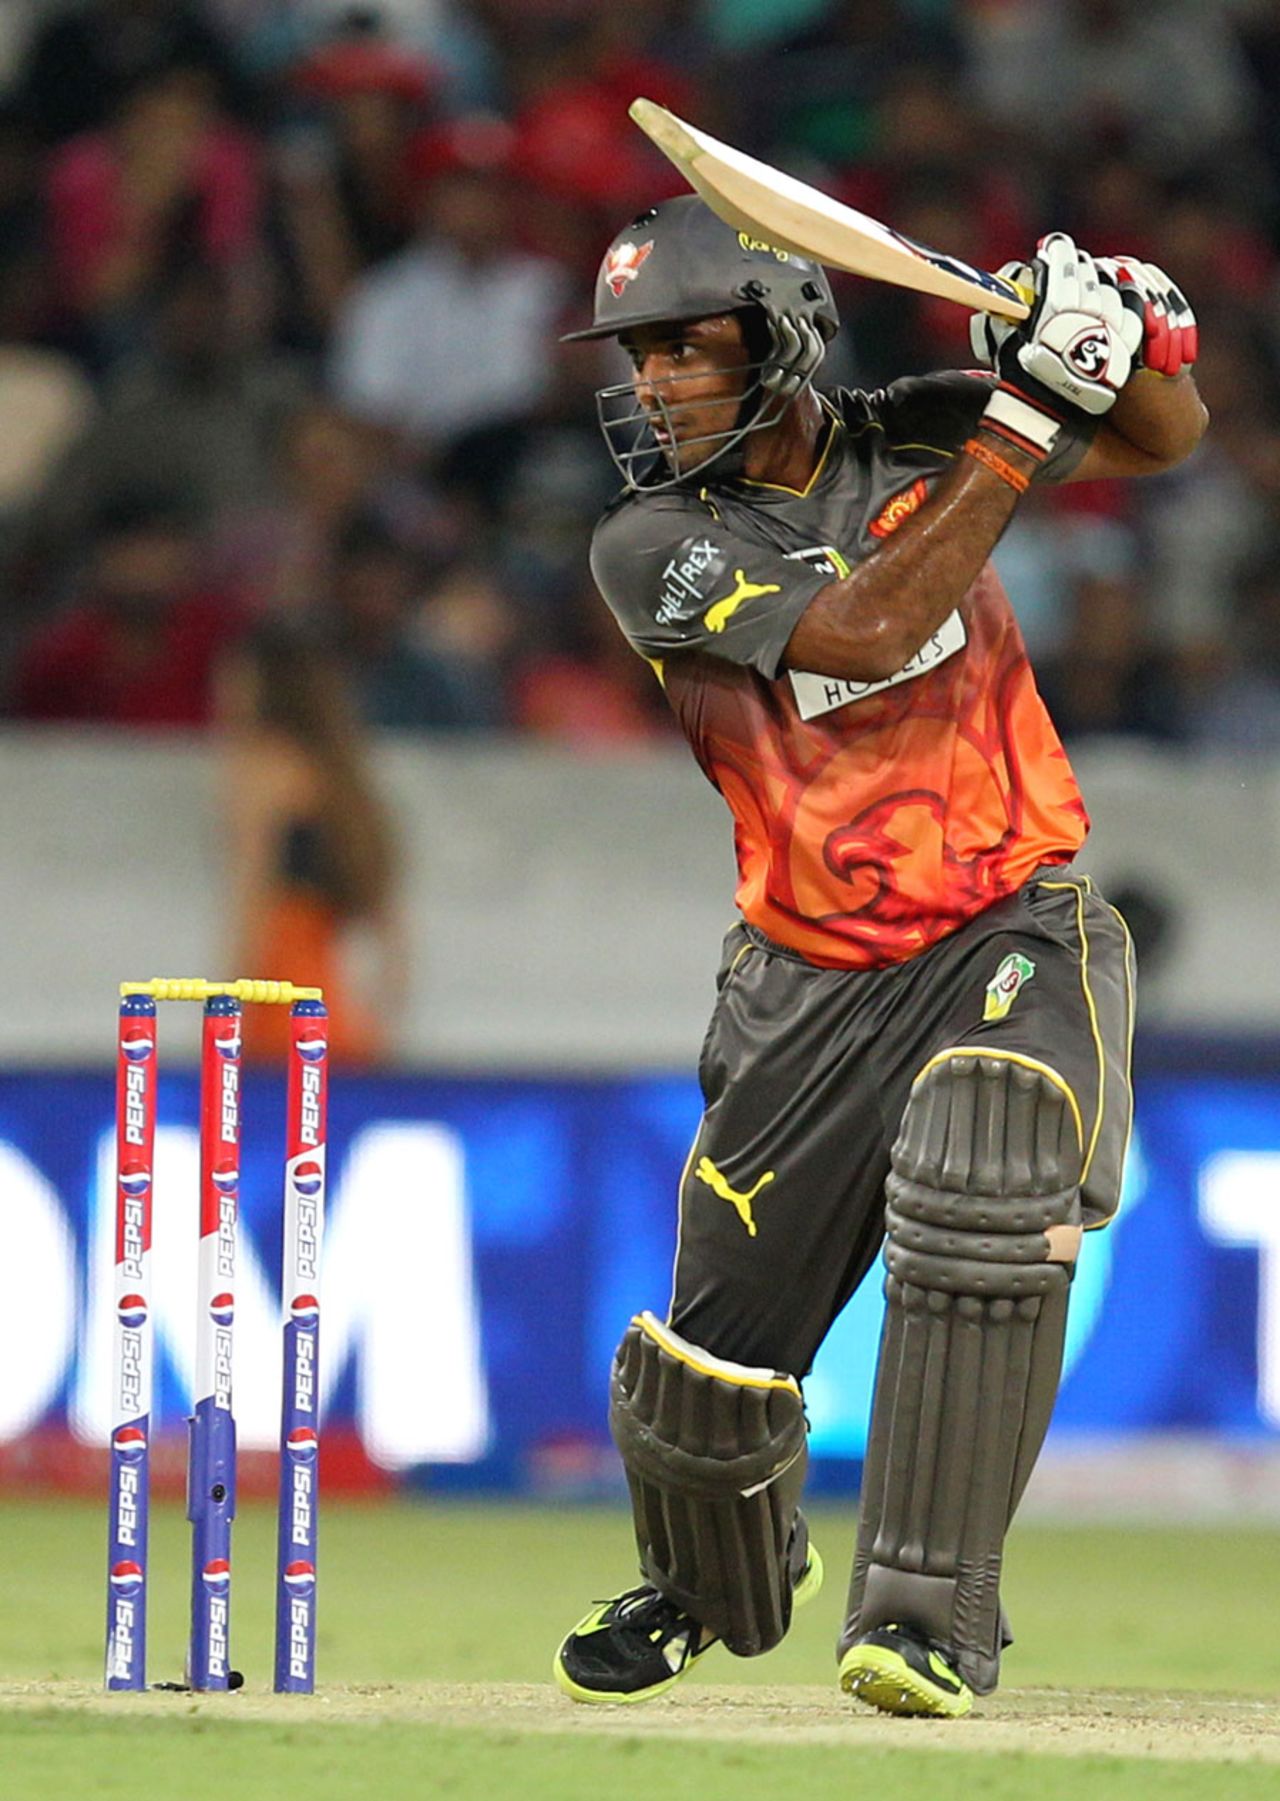 Hanuma Vihari struck a 39-ball 46, Sunrisers Hyderabad v Kings XI Punjab, IPL 2013, Hyderabad, April 19, 2013